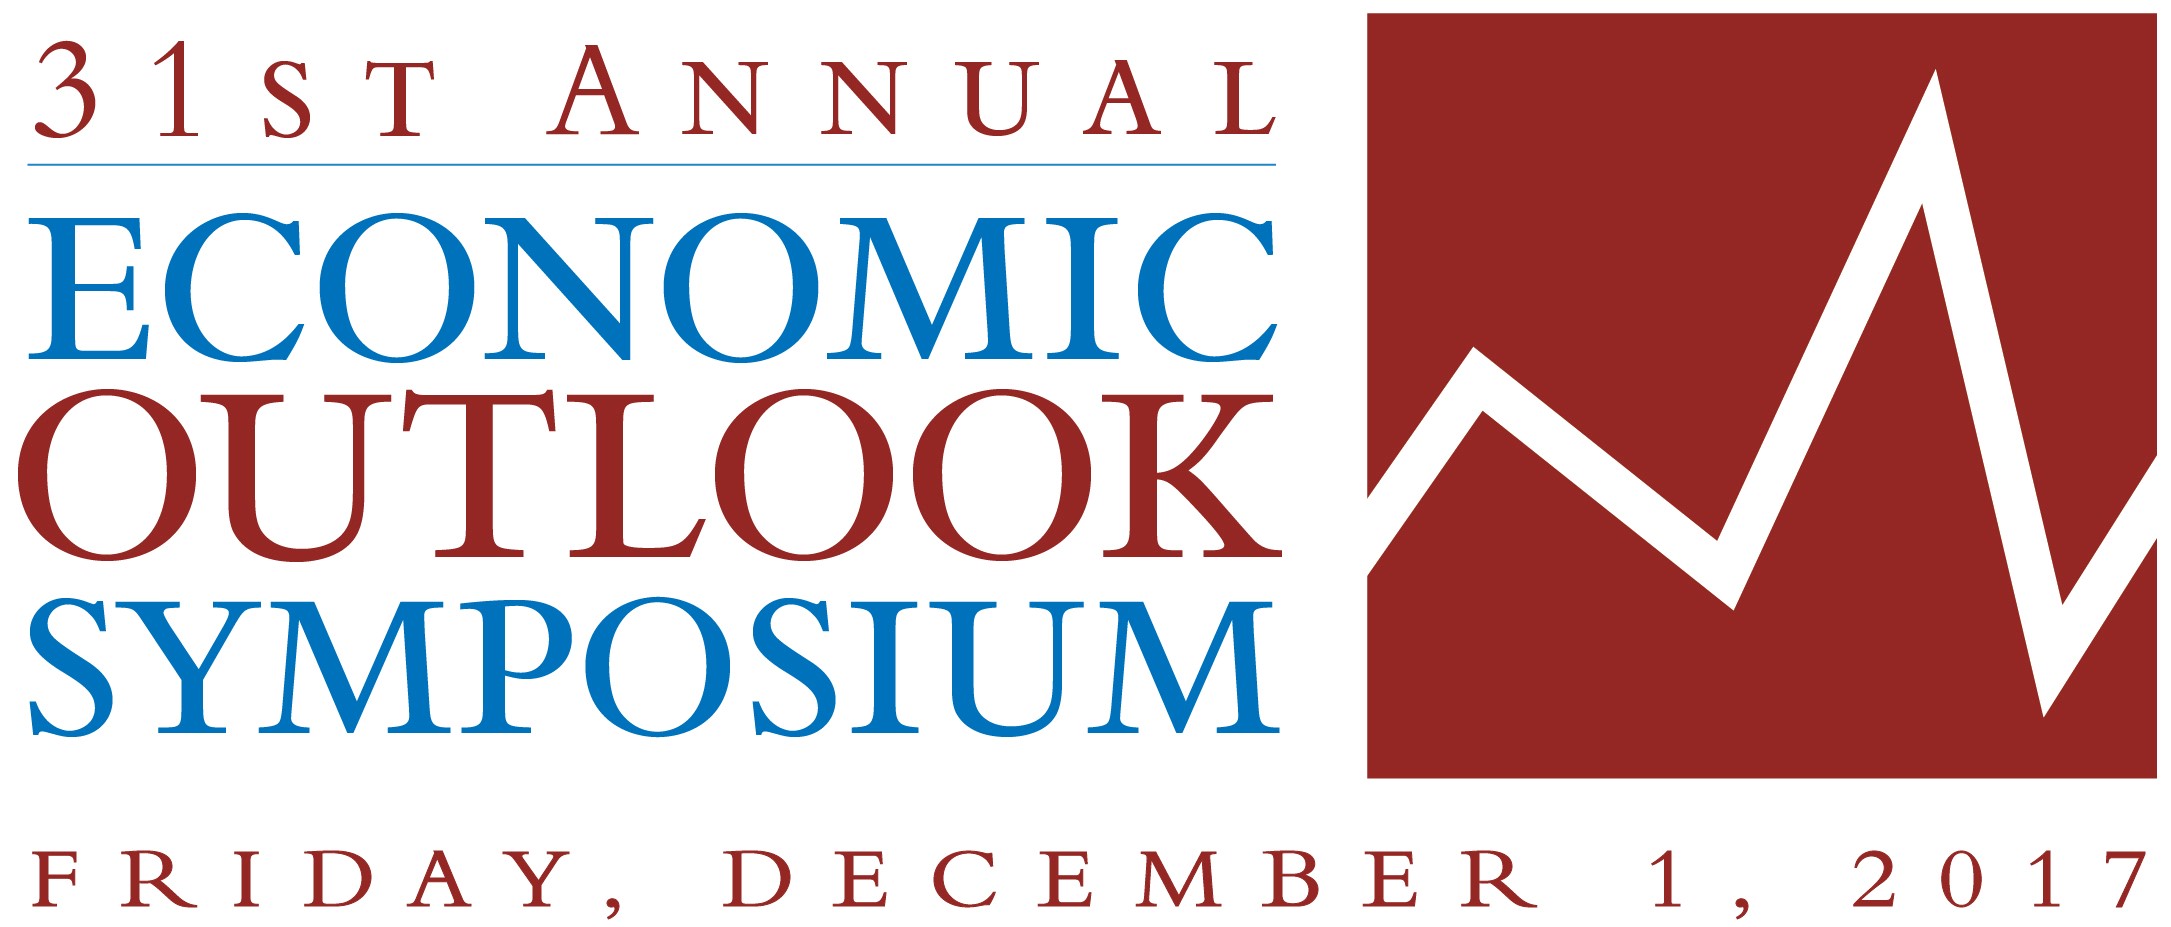 Economic Outlook Symposium 2017